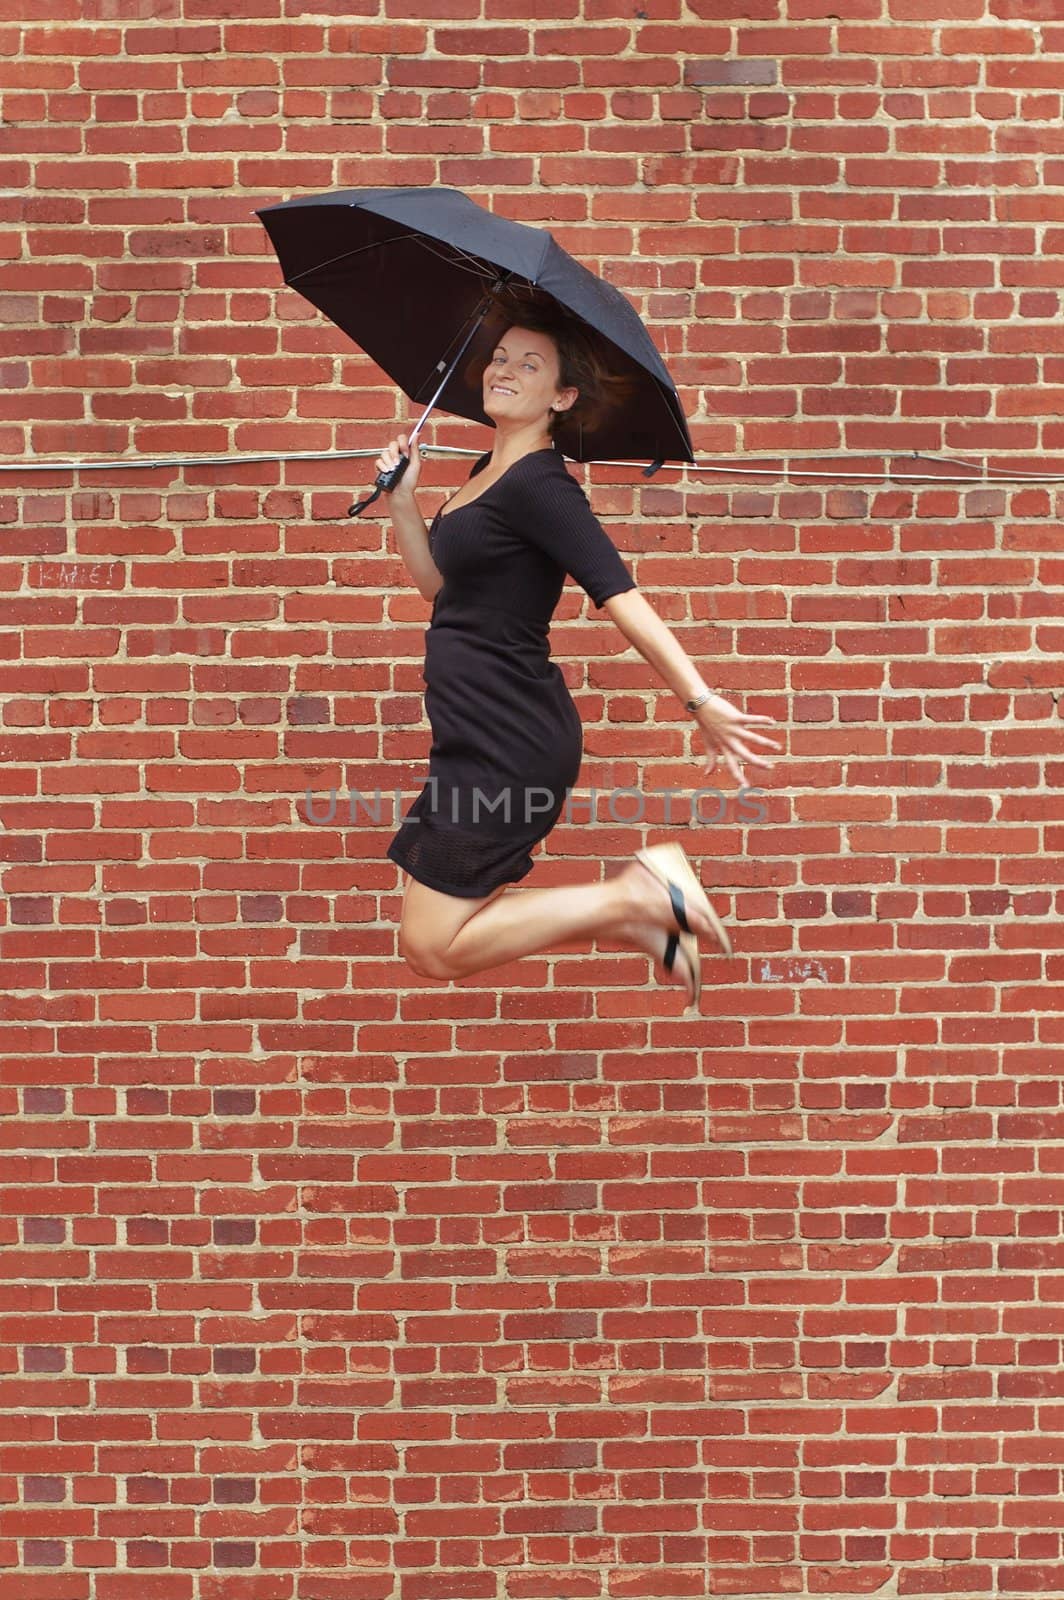 Umbrella Jump! by cardmaverick